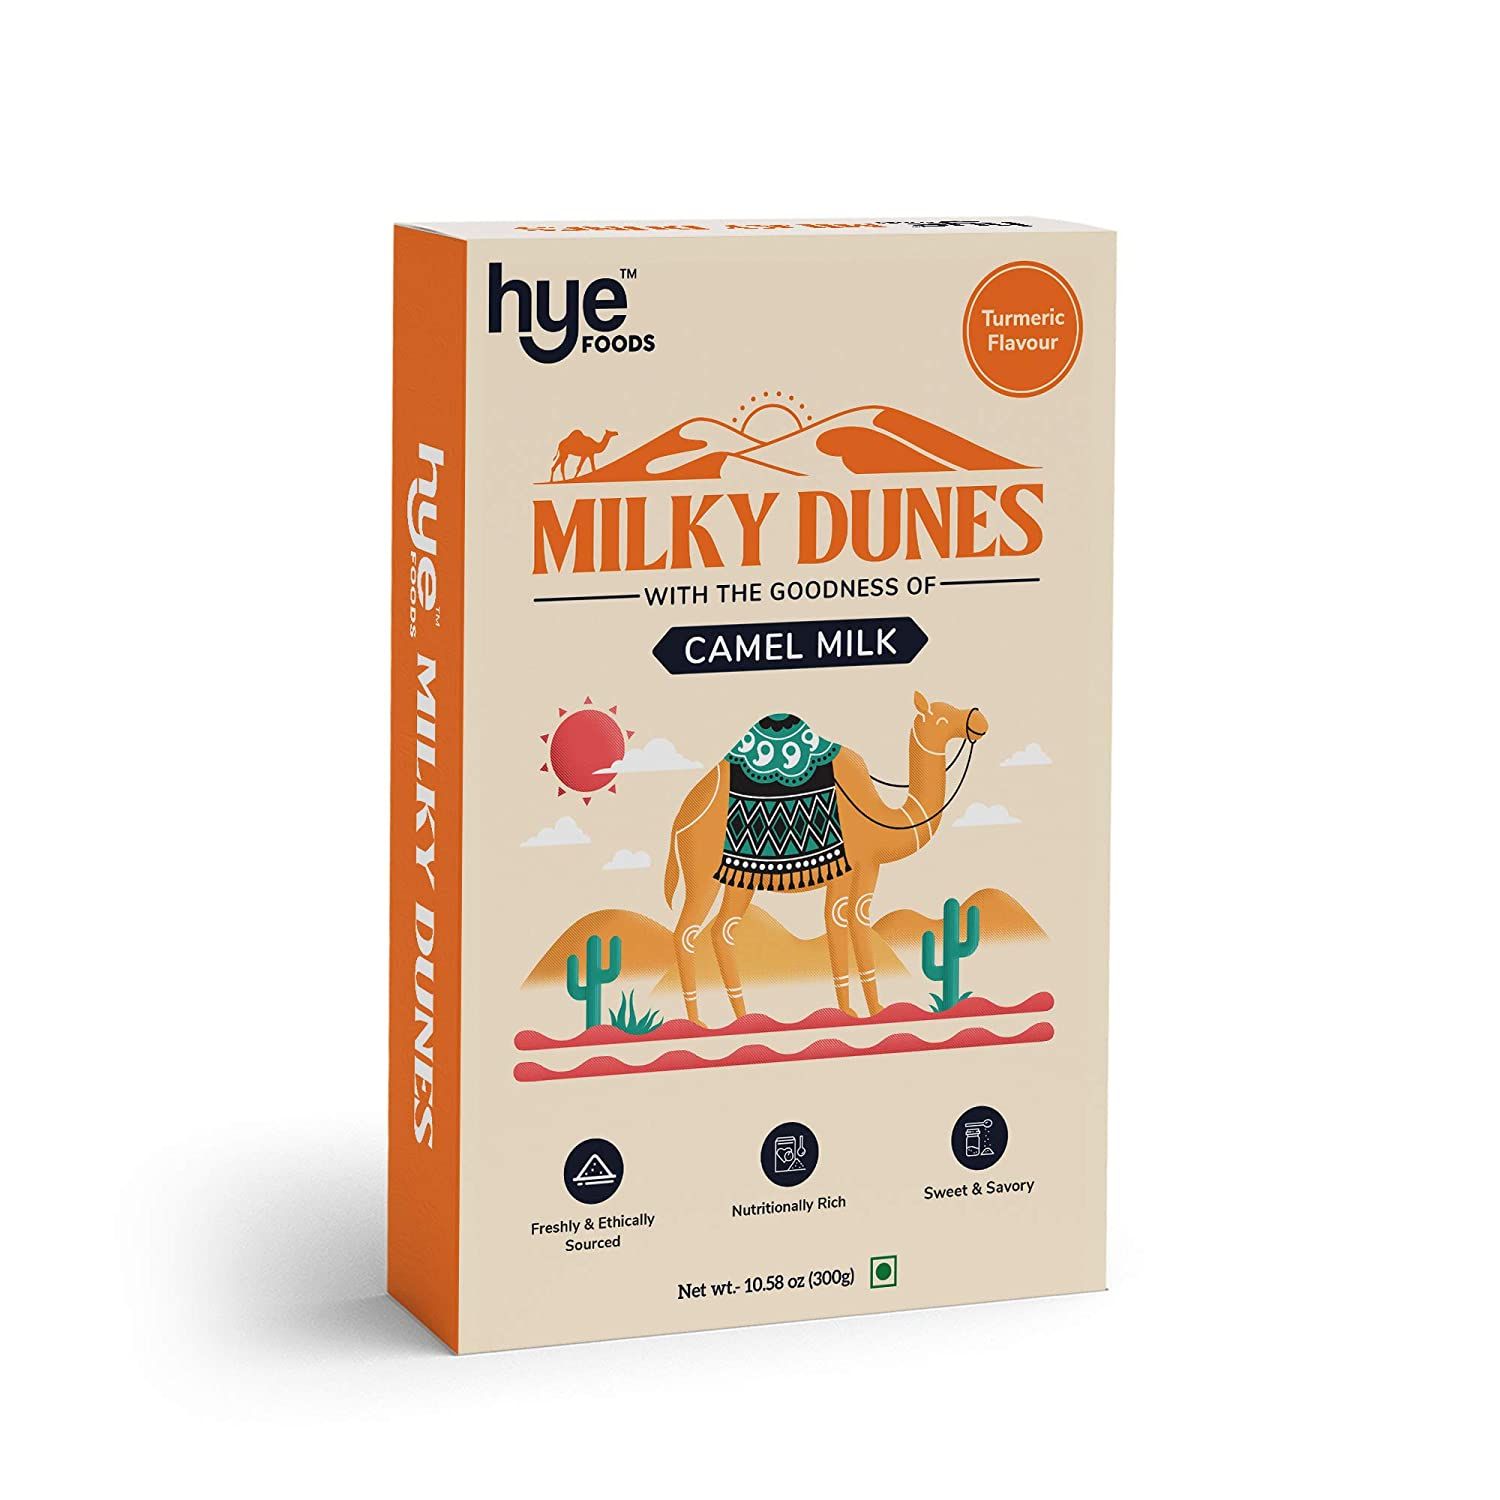 Hey Foods Milky Dunes Camel Powder Turmeric Image